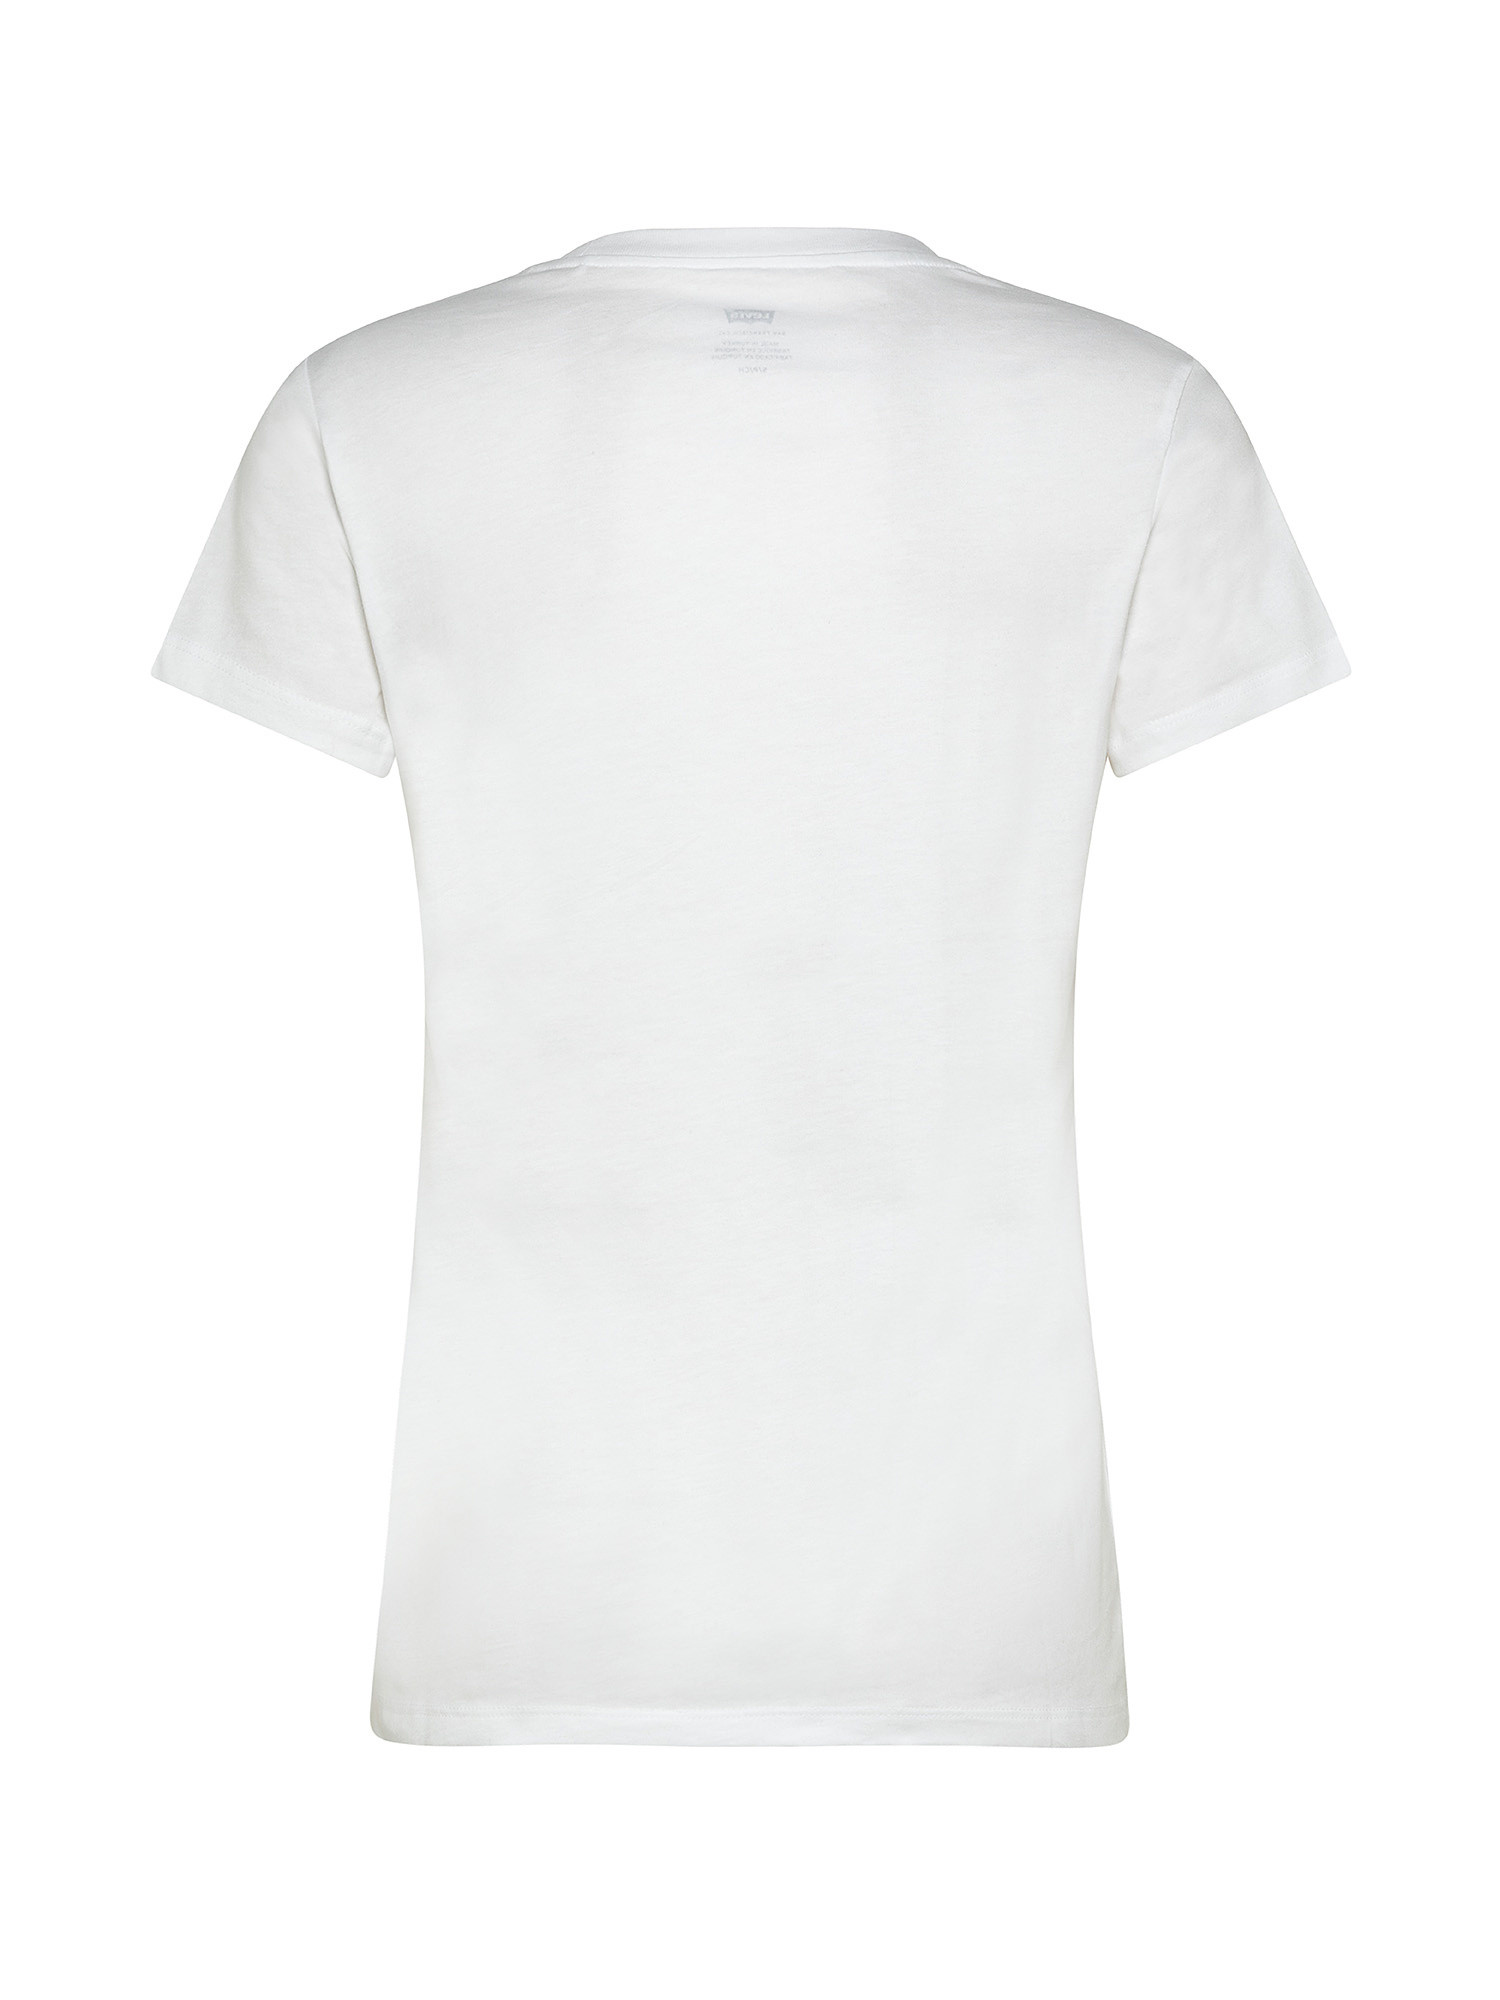  Perfect Tee logo t-shirt, White, large image number 1